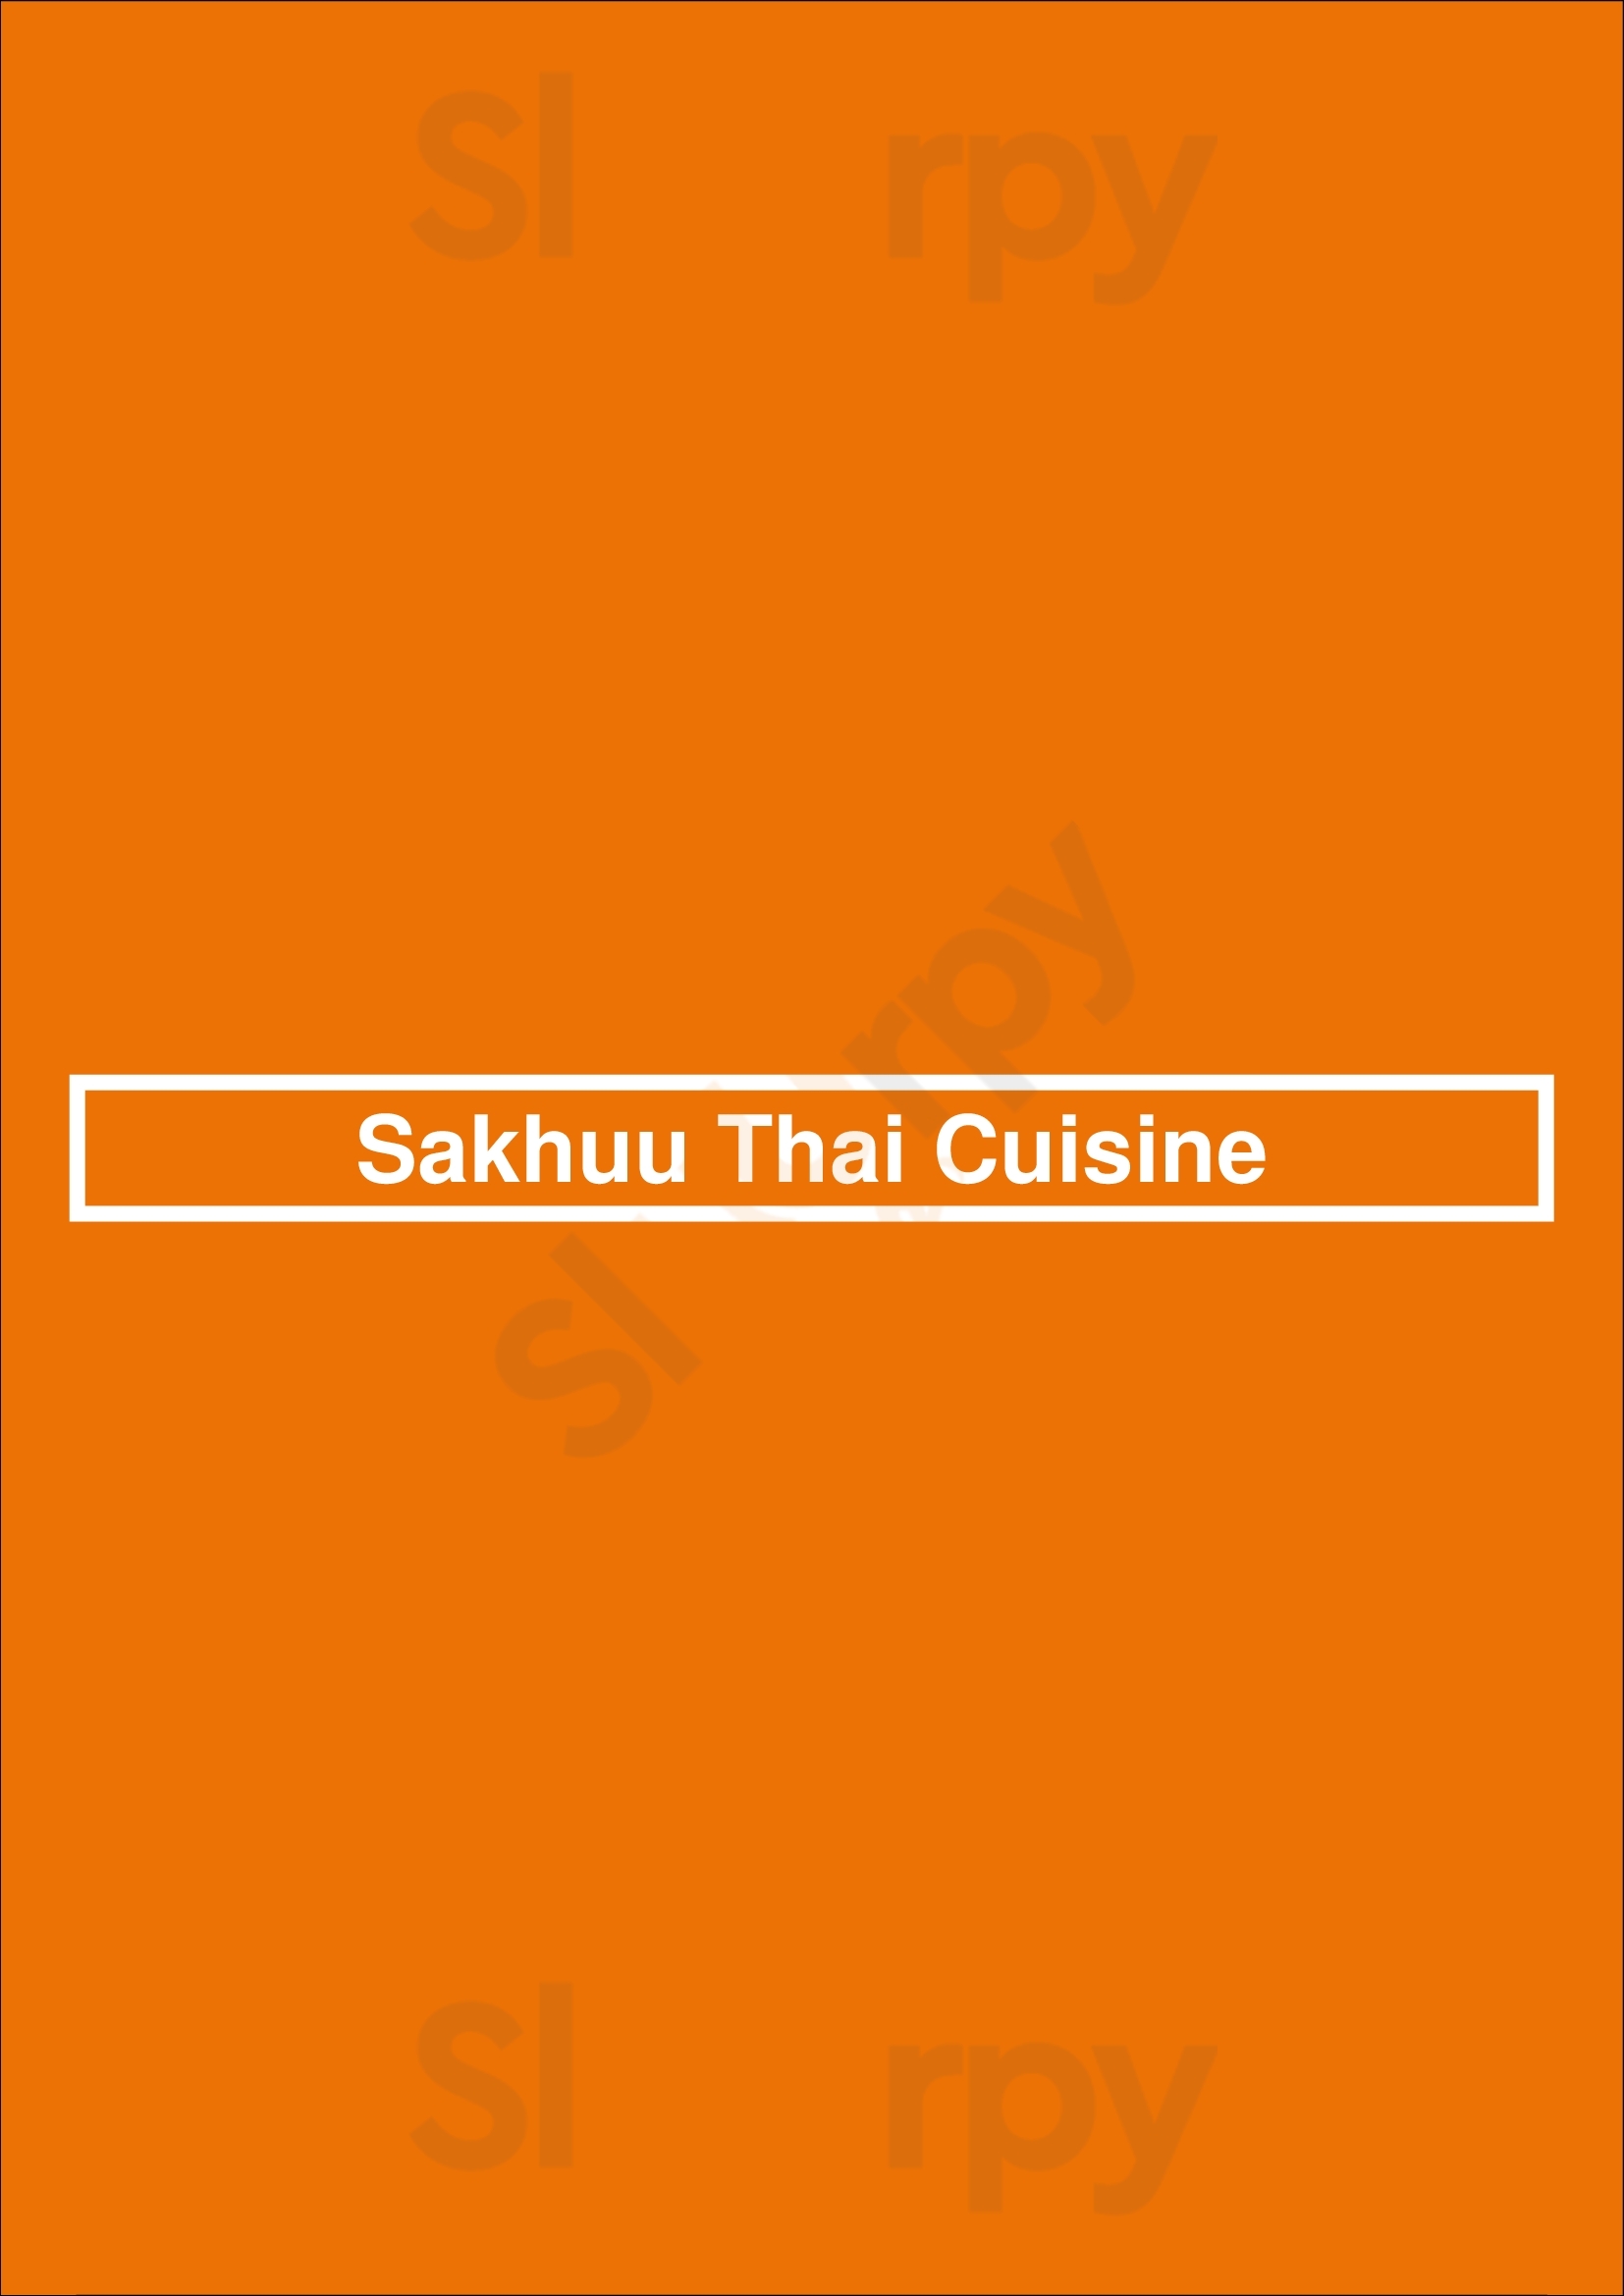 Sakhuu Thai Cuisine Dallas Menu - 1